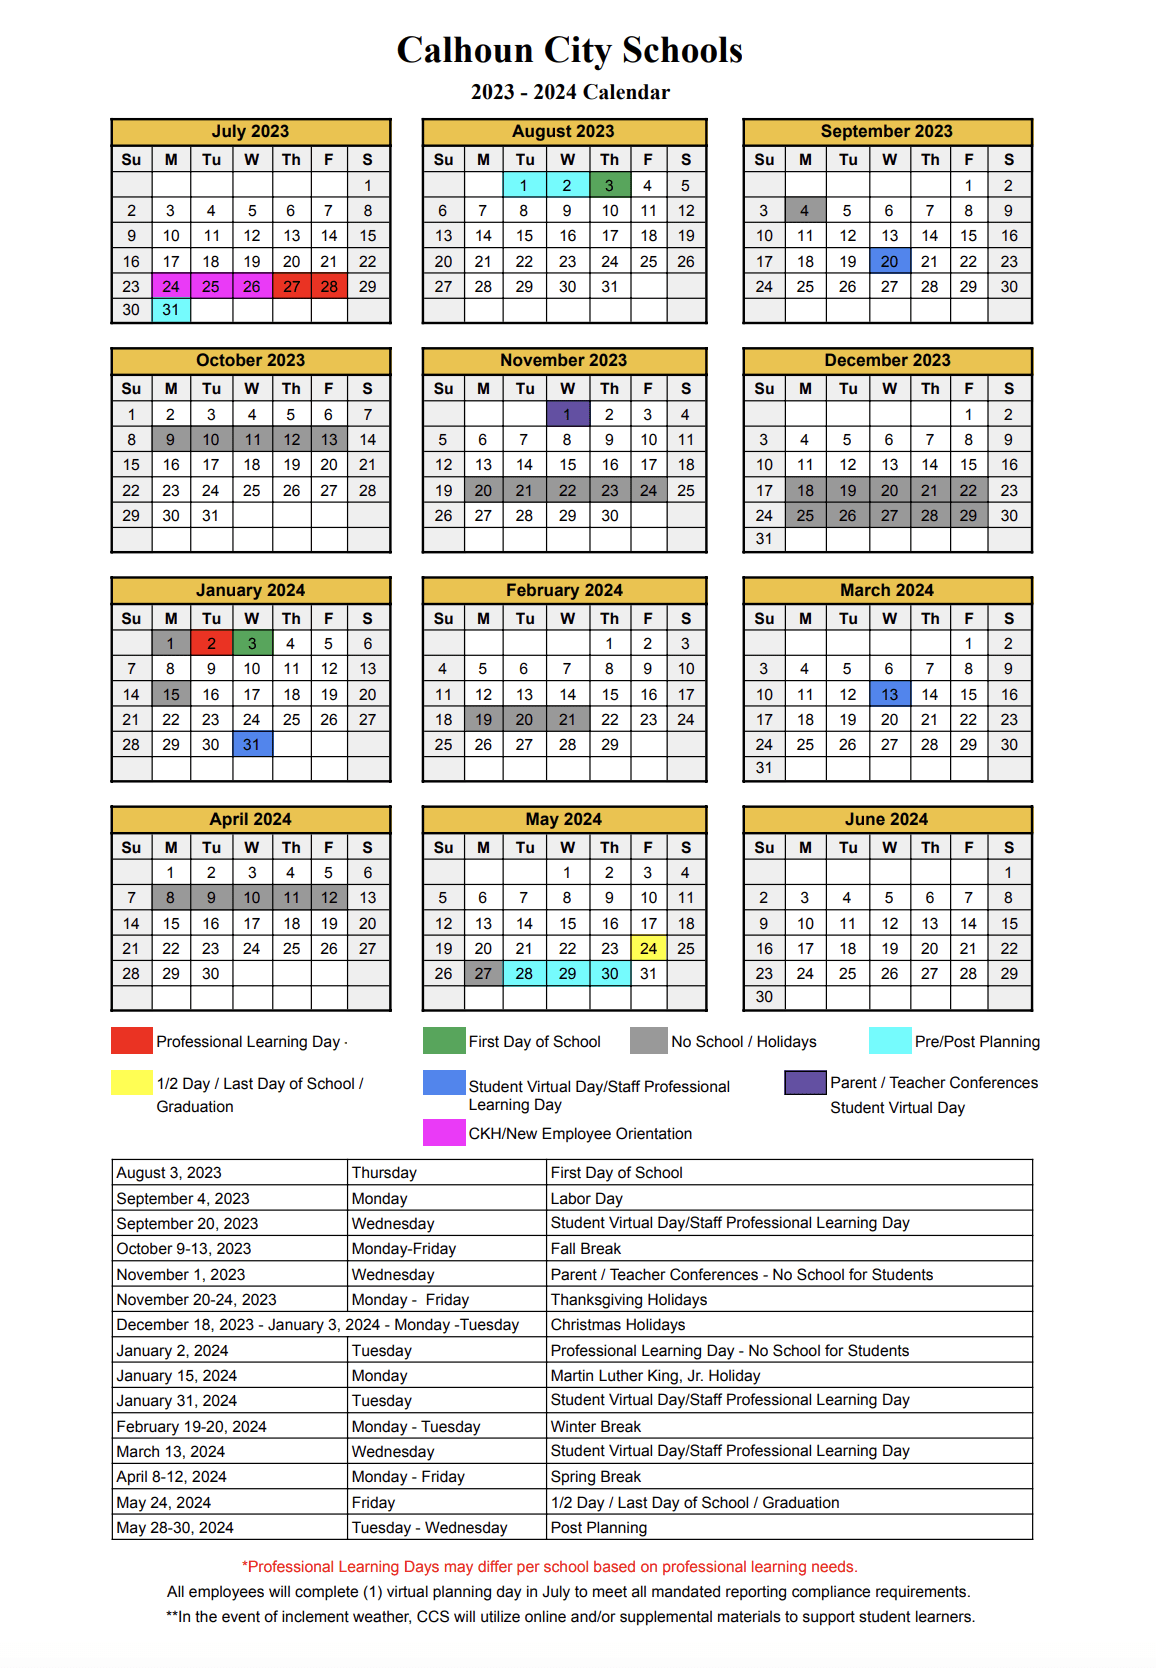 Calhoun City Schools Calendar 2024 and 2025